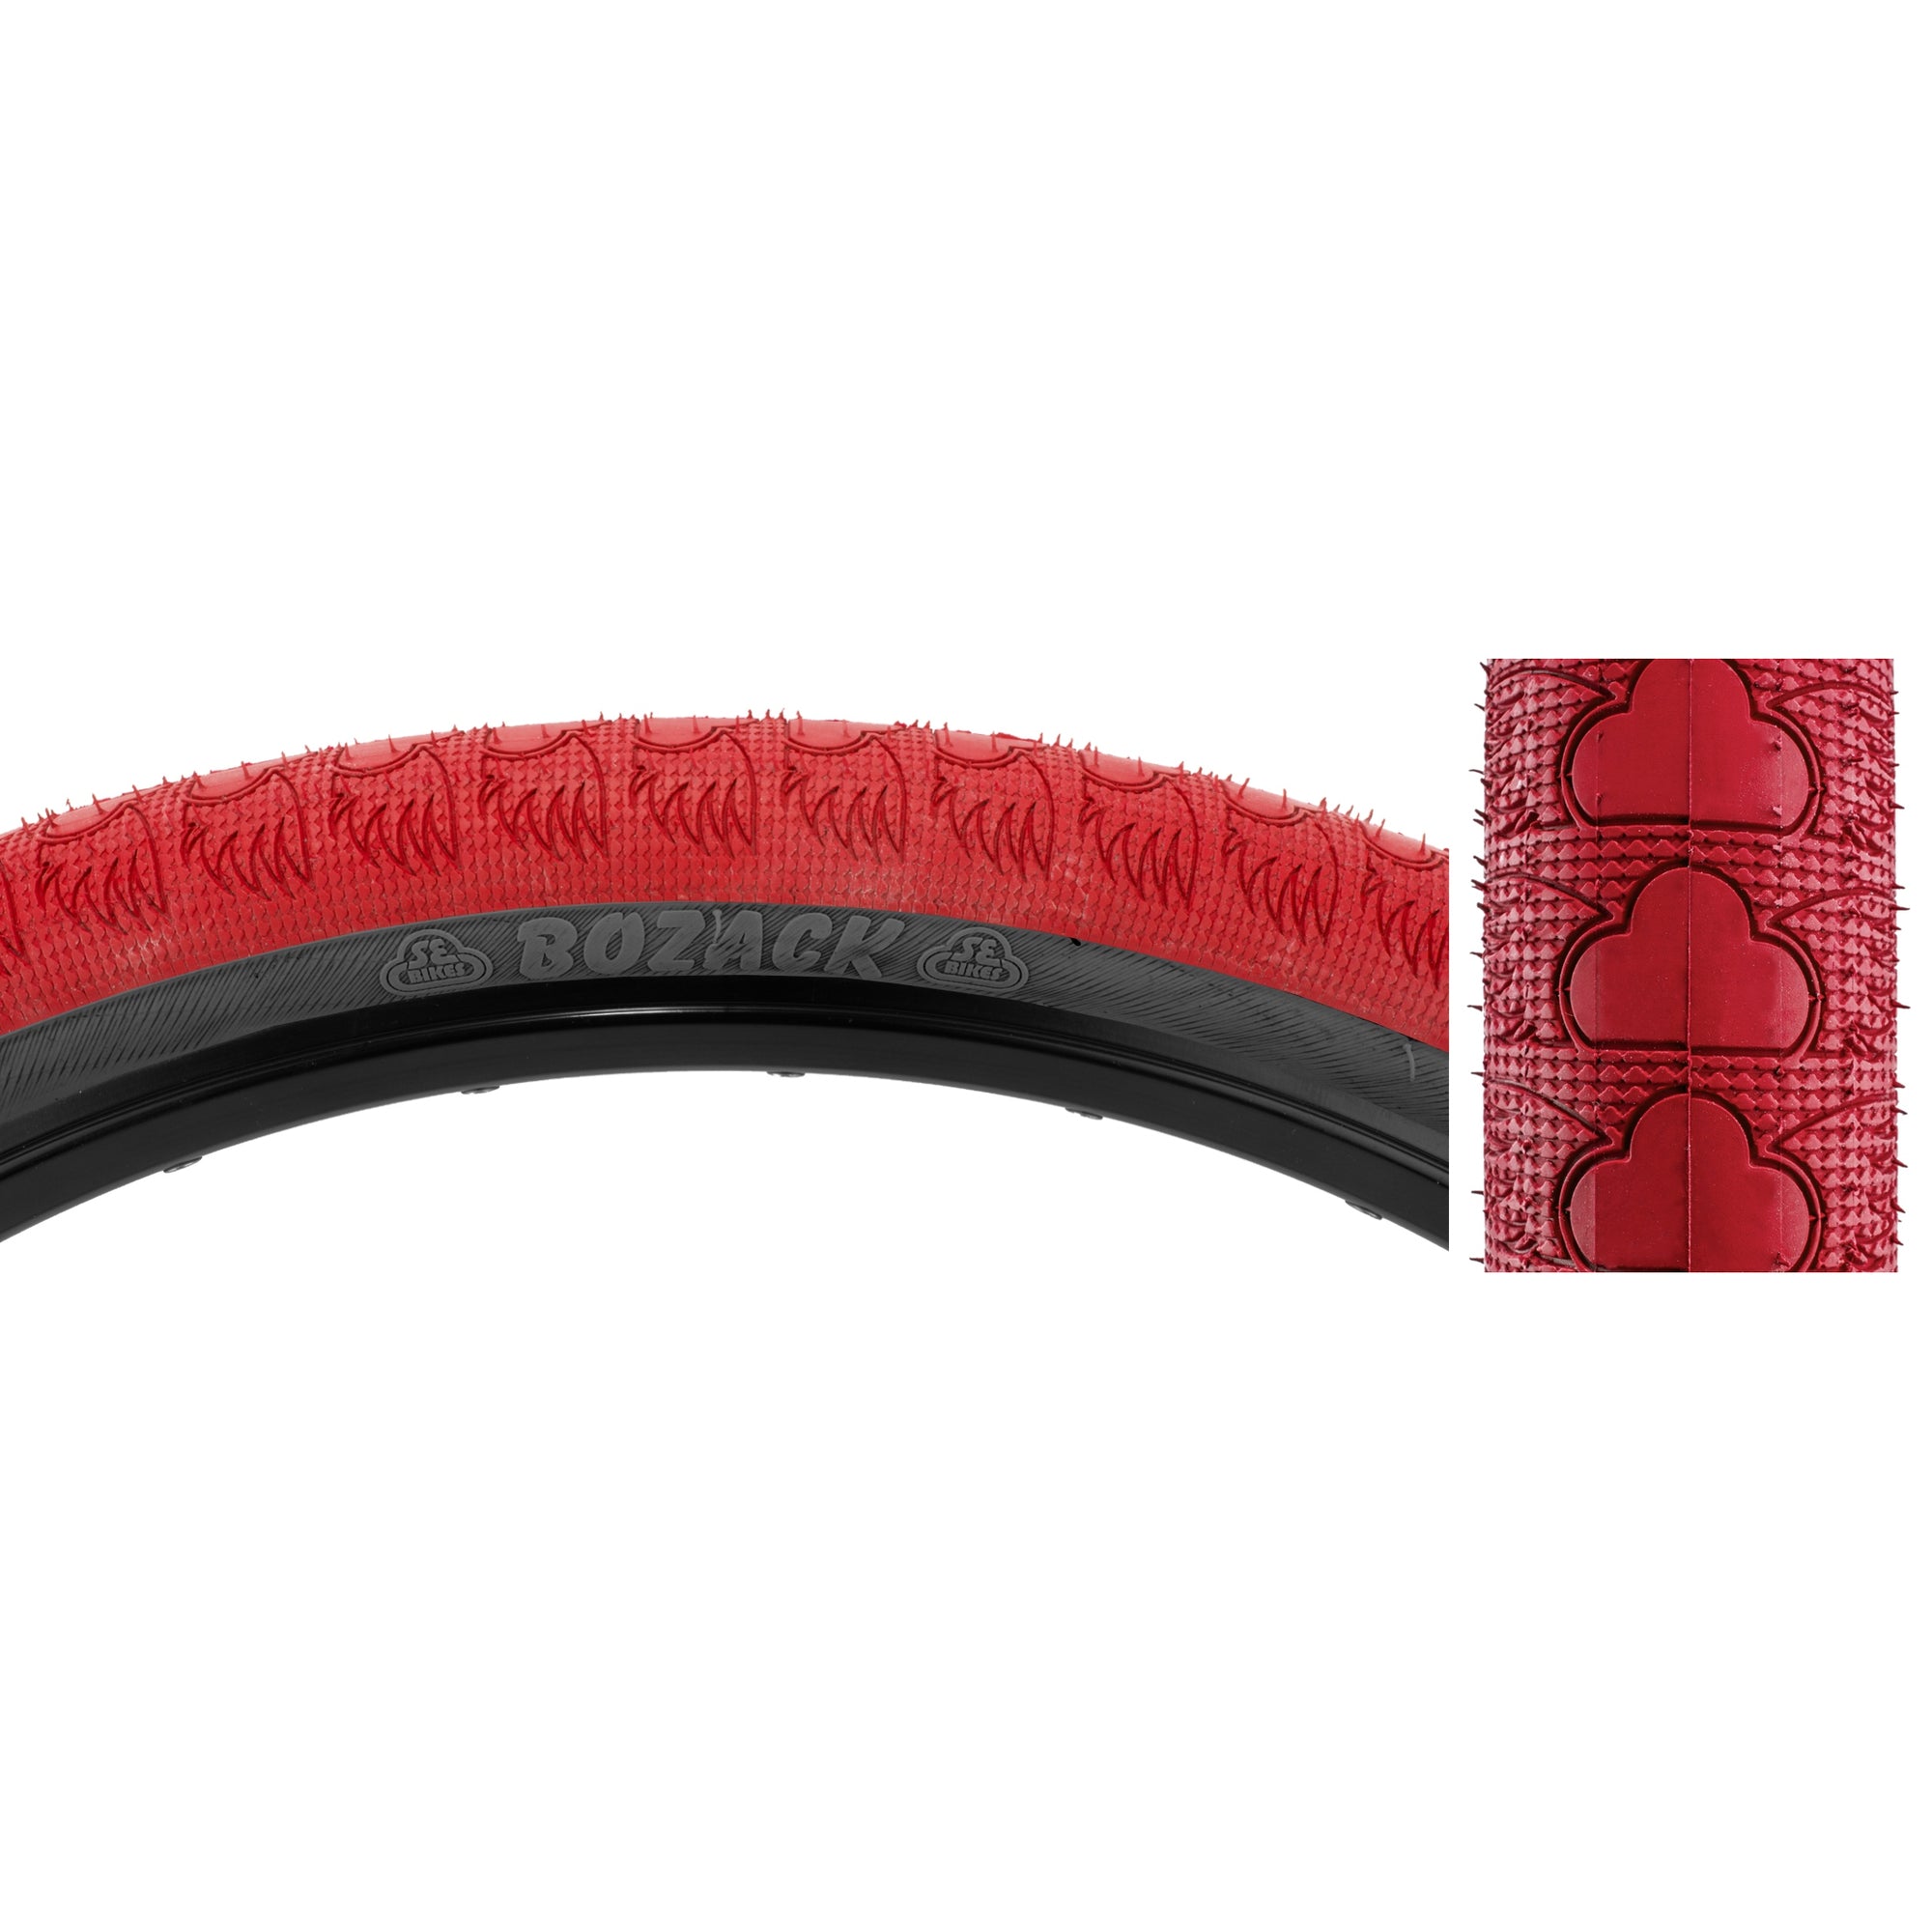 24x2.4 SE Racing Bozack BMX Tire - Red w/ Black Sidewall